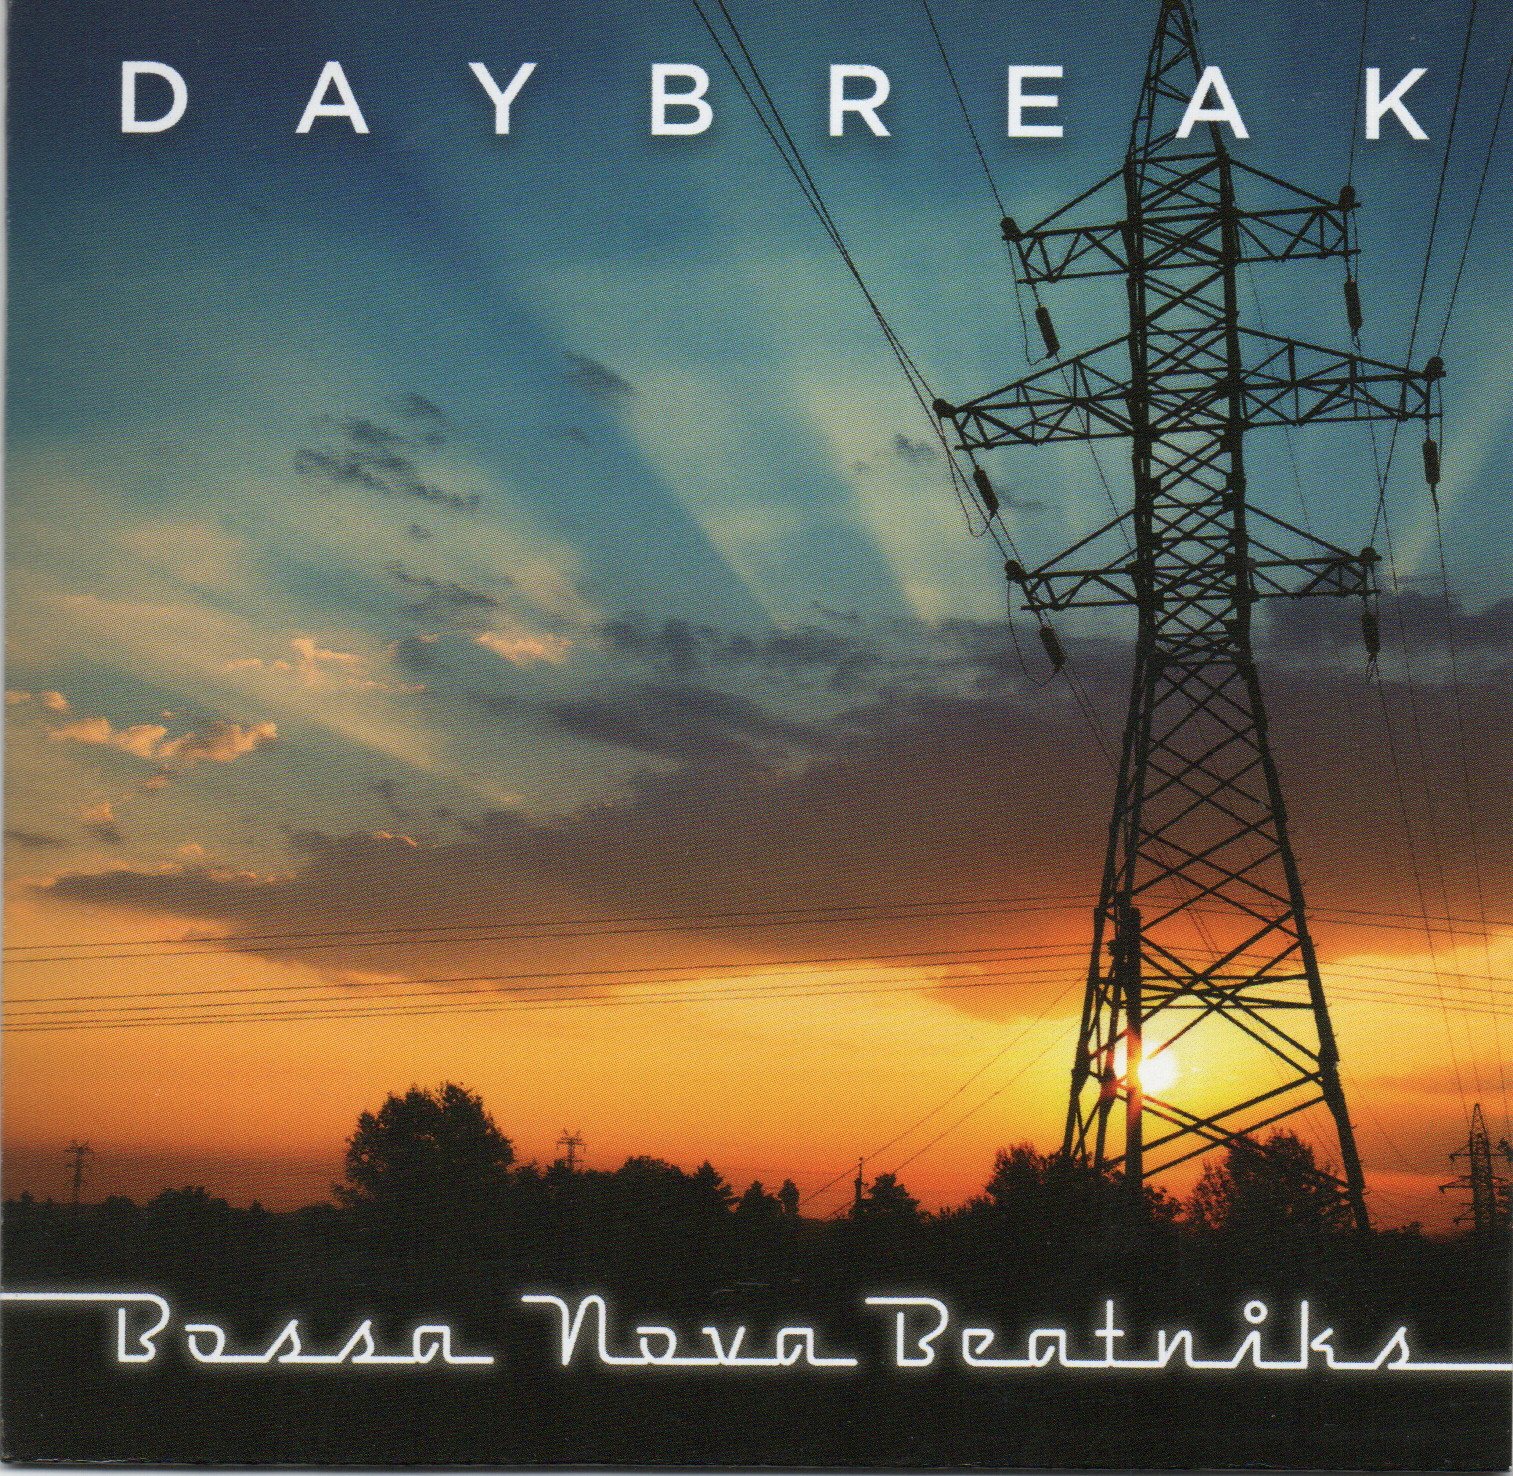 Bossa Nova Beatniks "Daybreak"